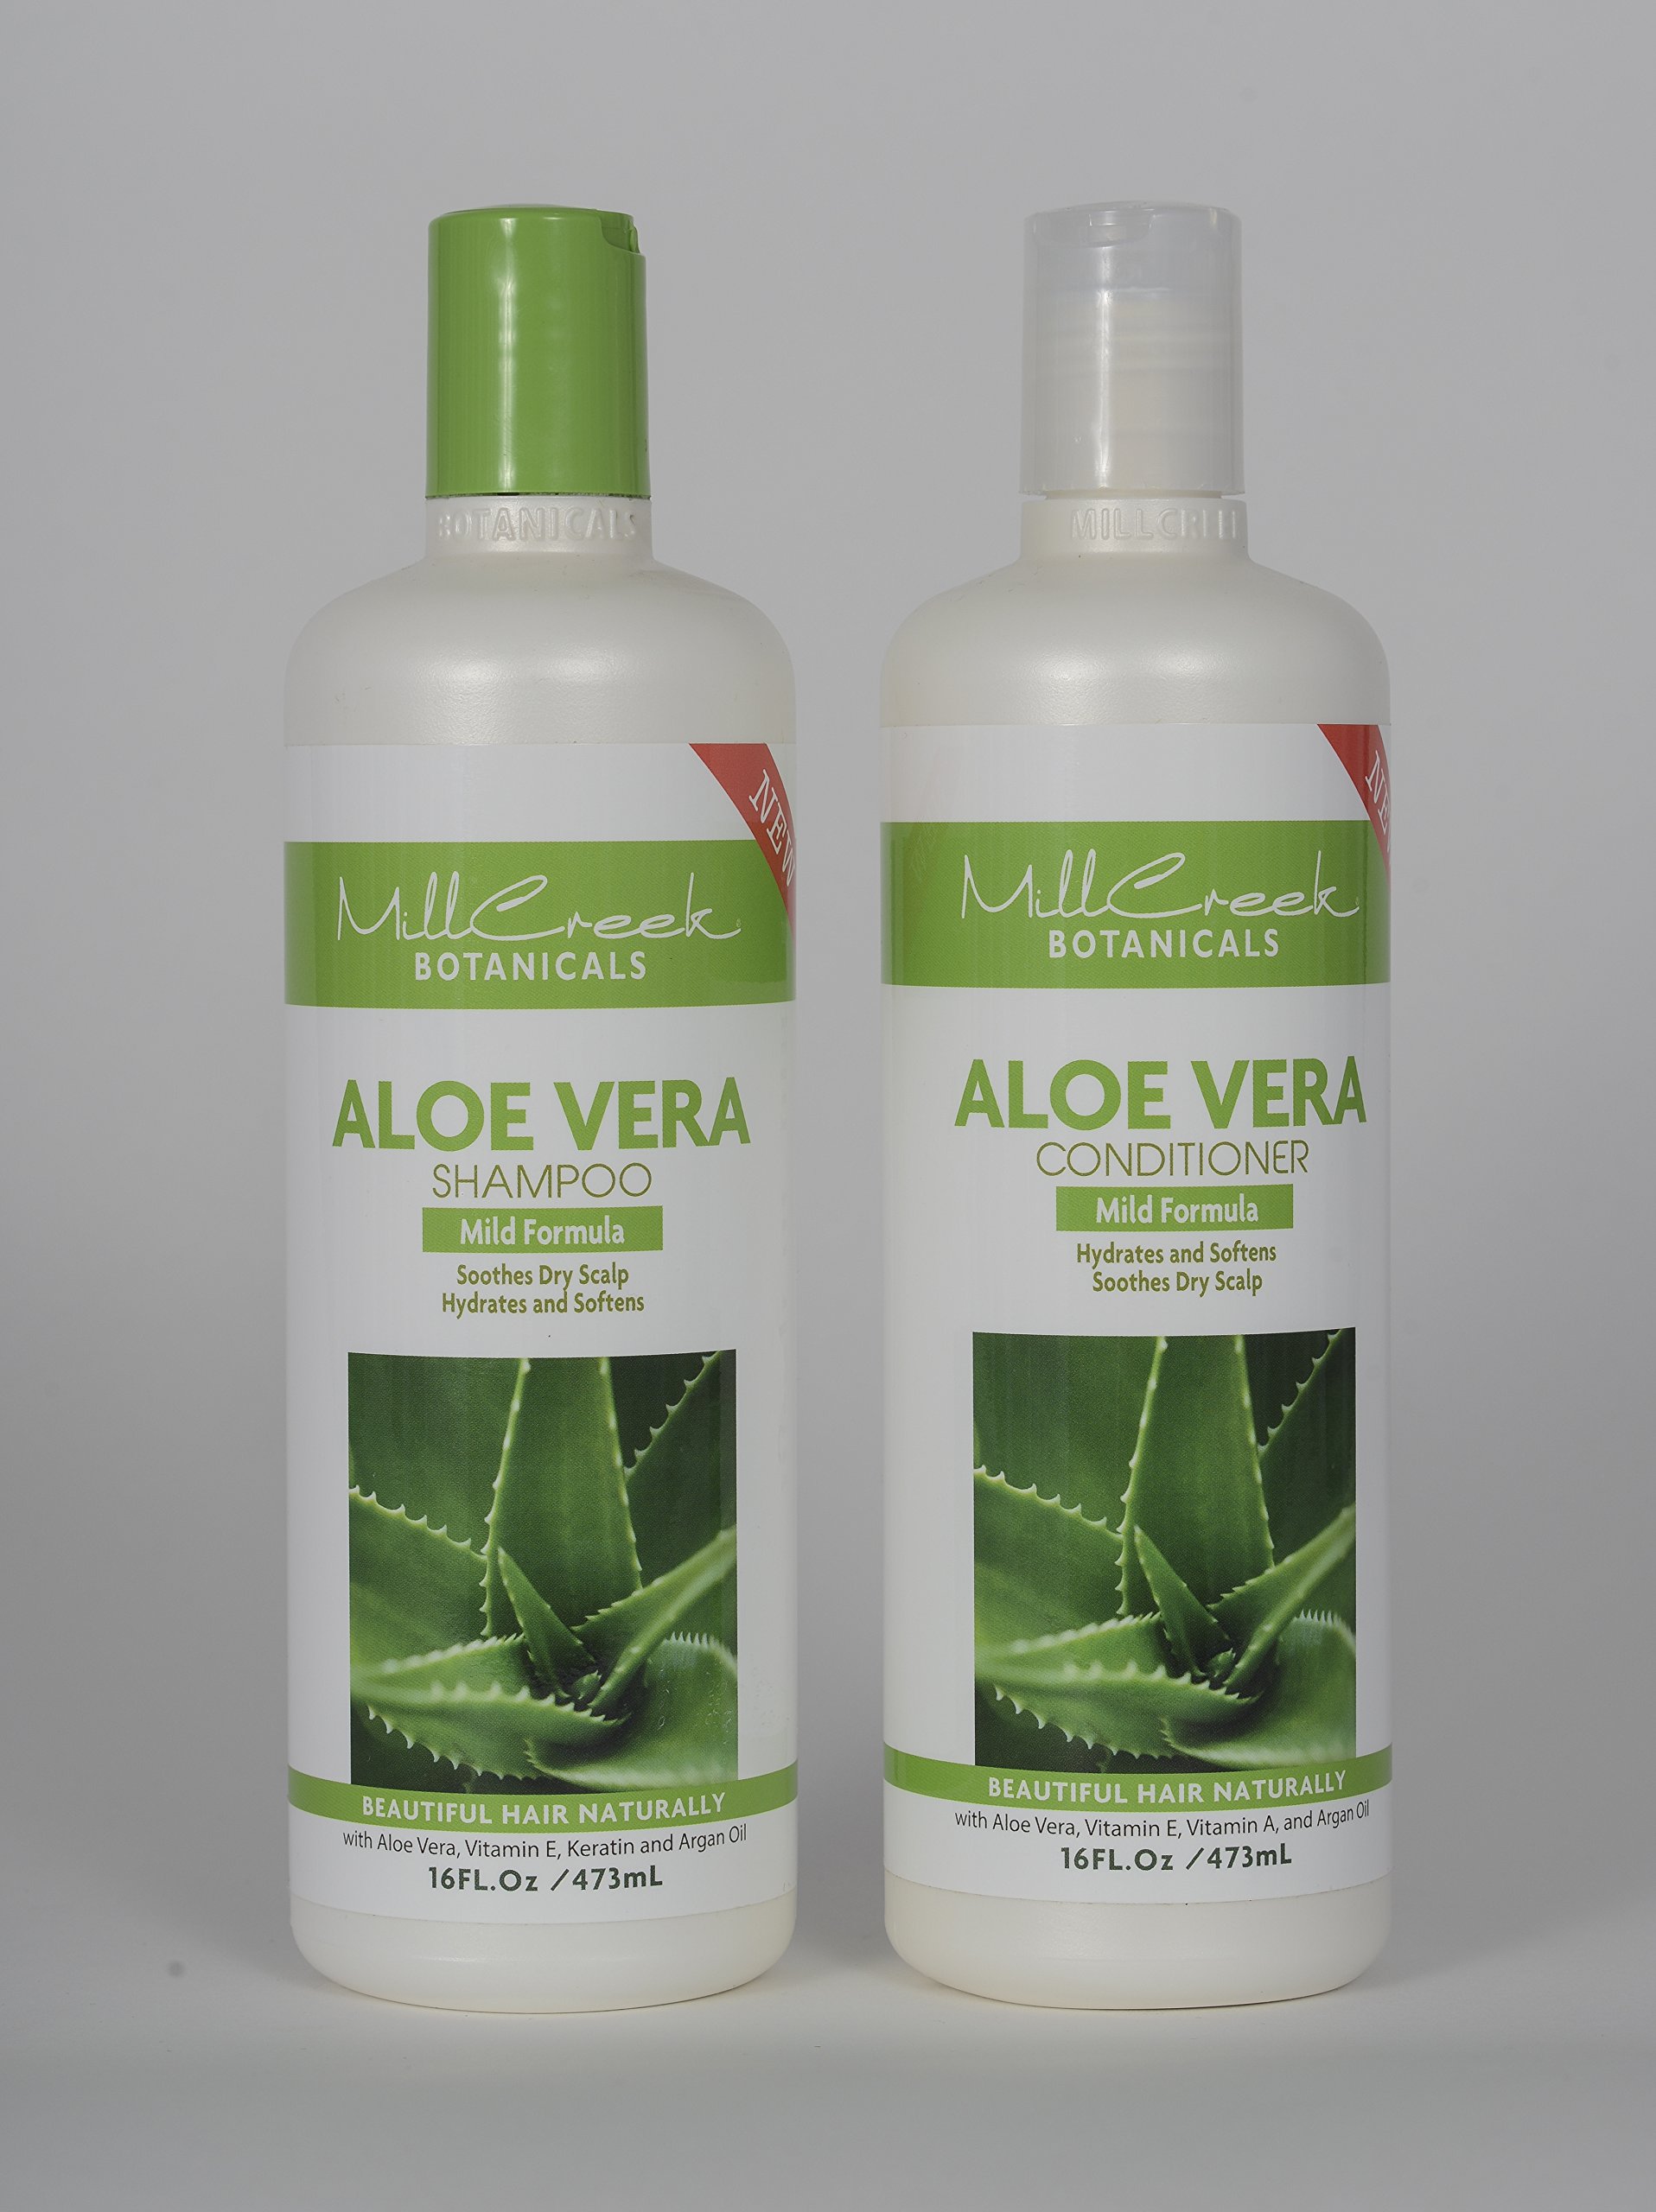 mill creek botanicals keratin shampoo reviews